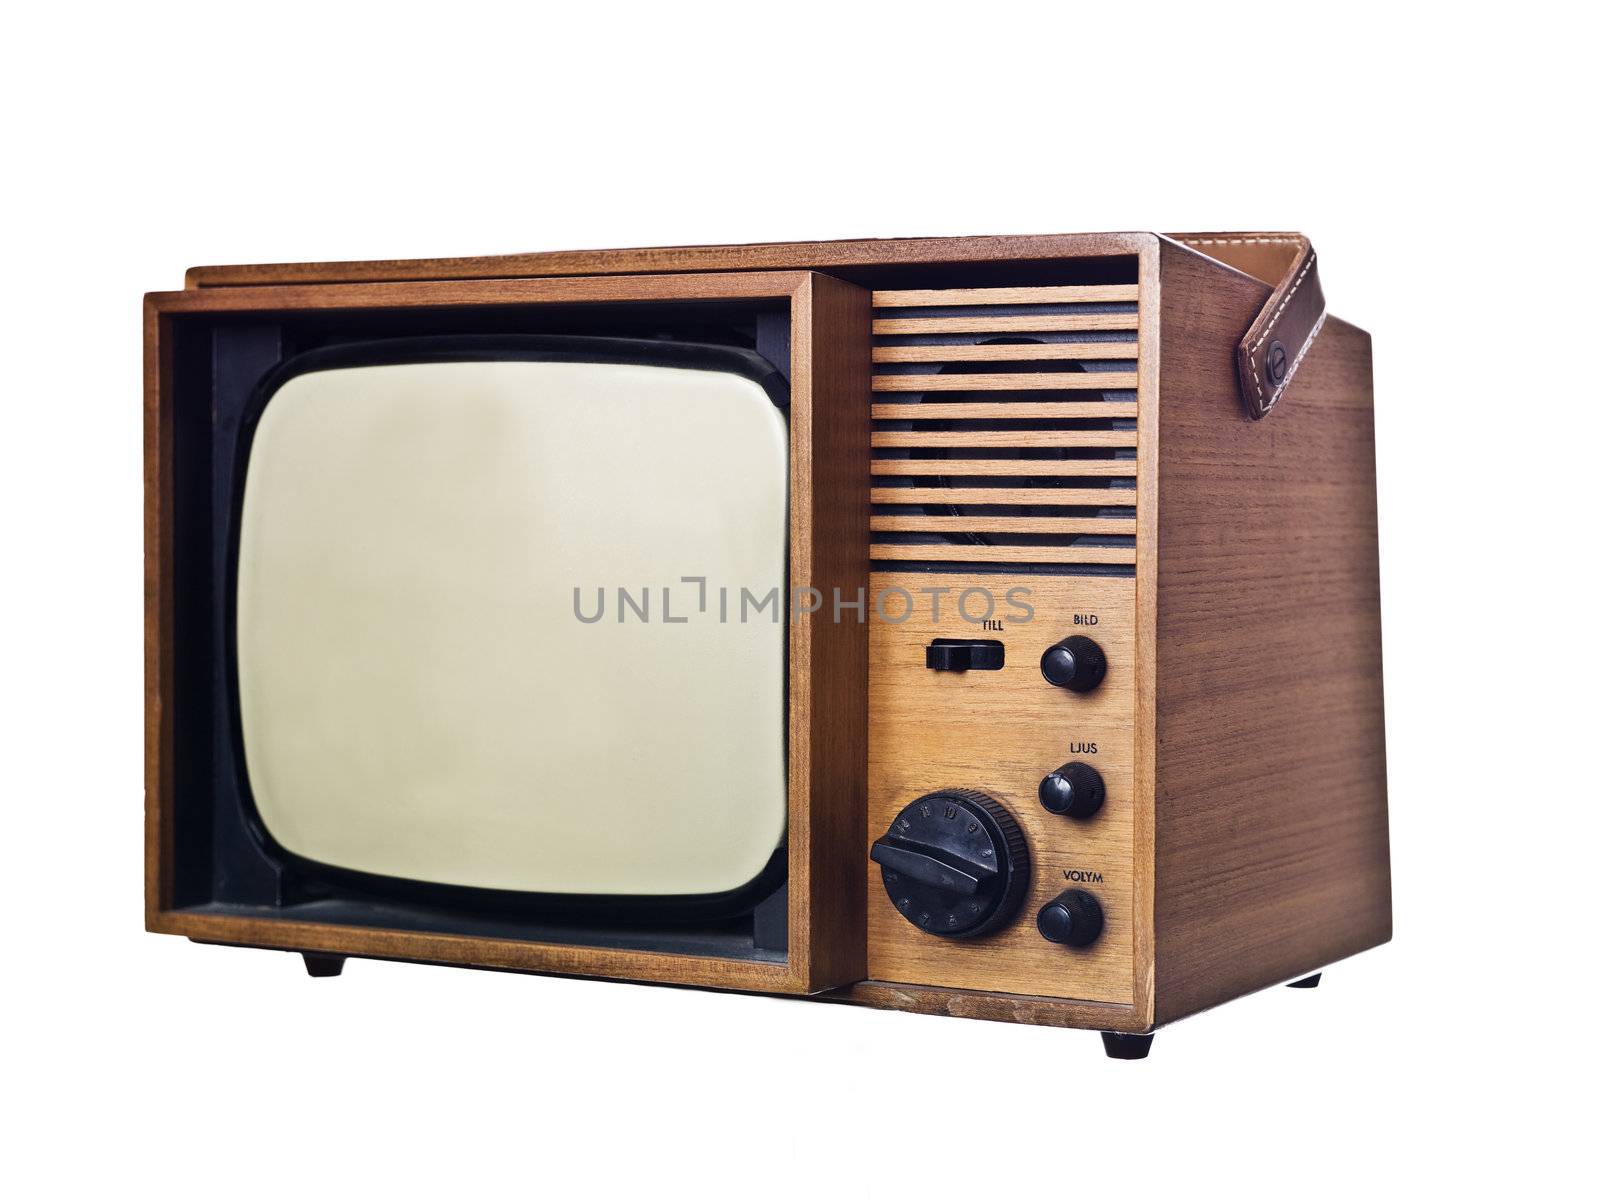 Vintage television isolated on white background